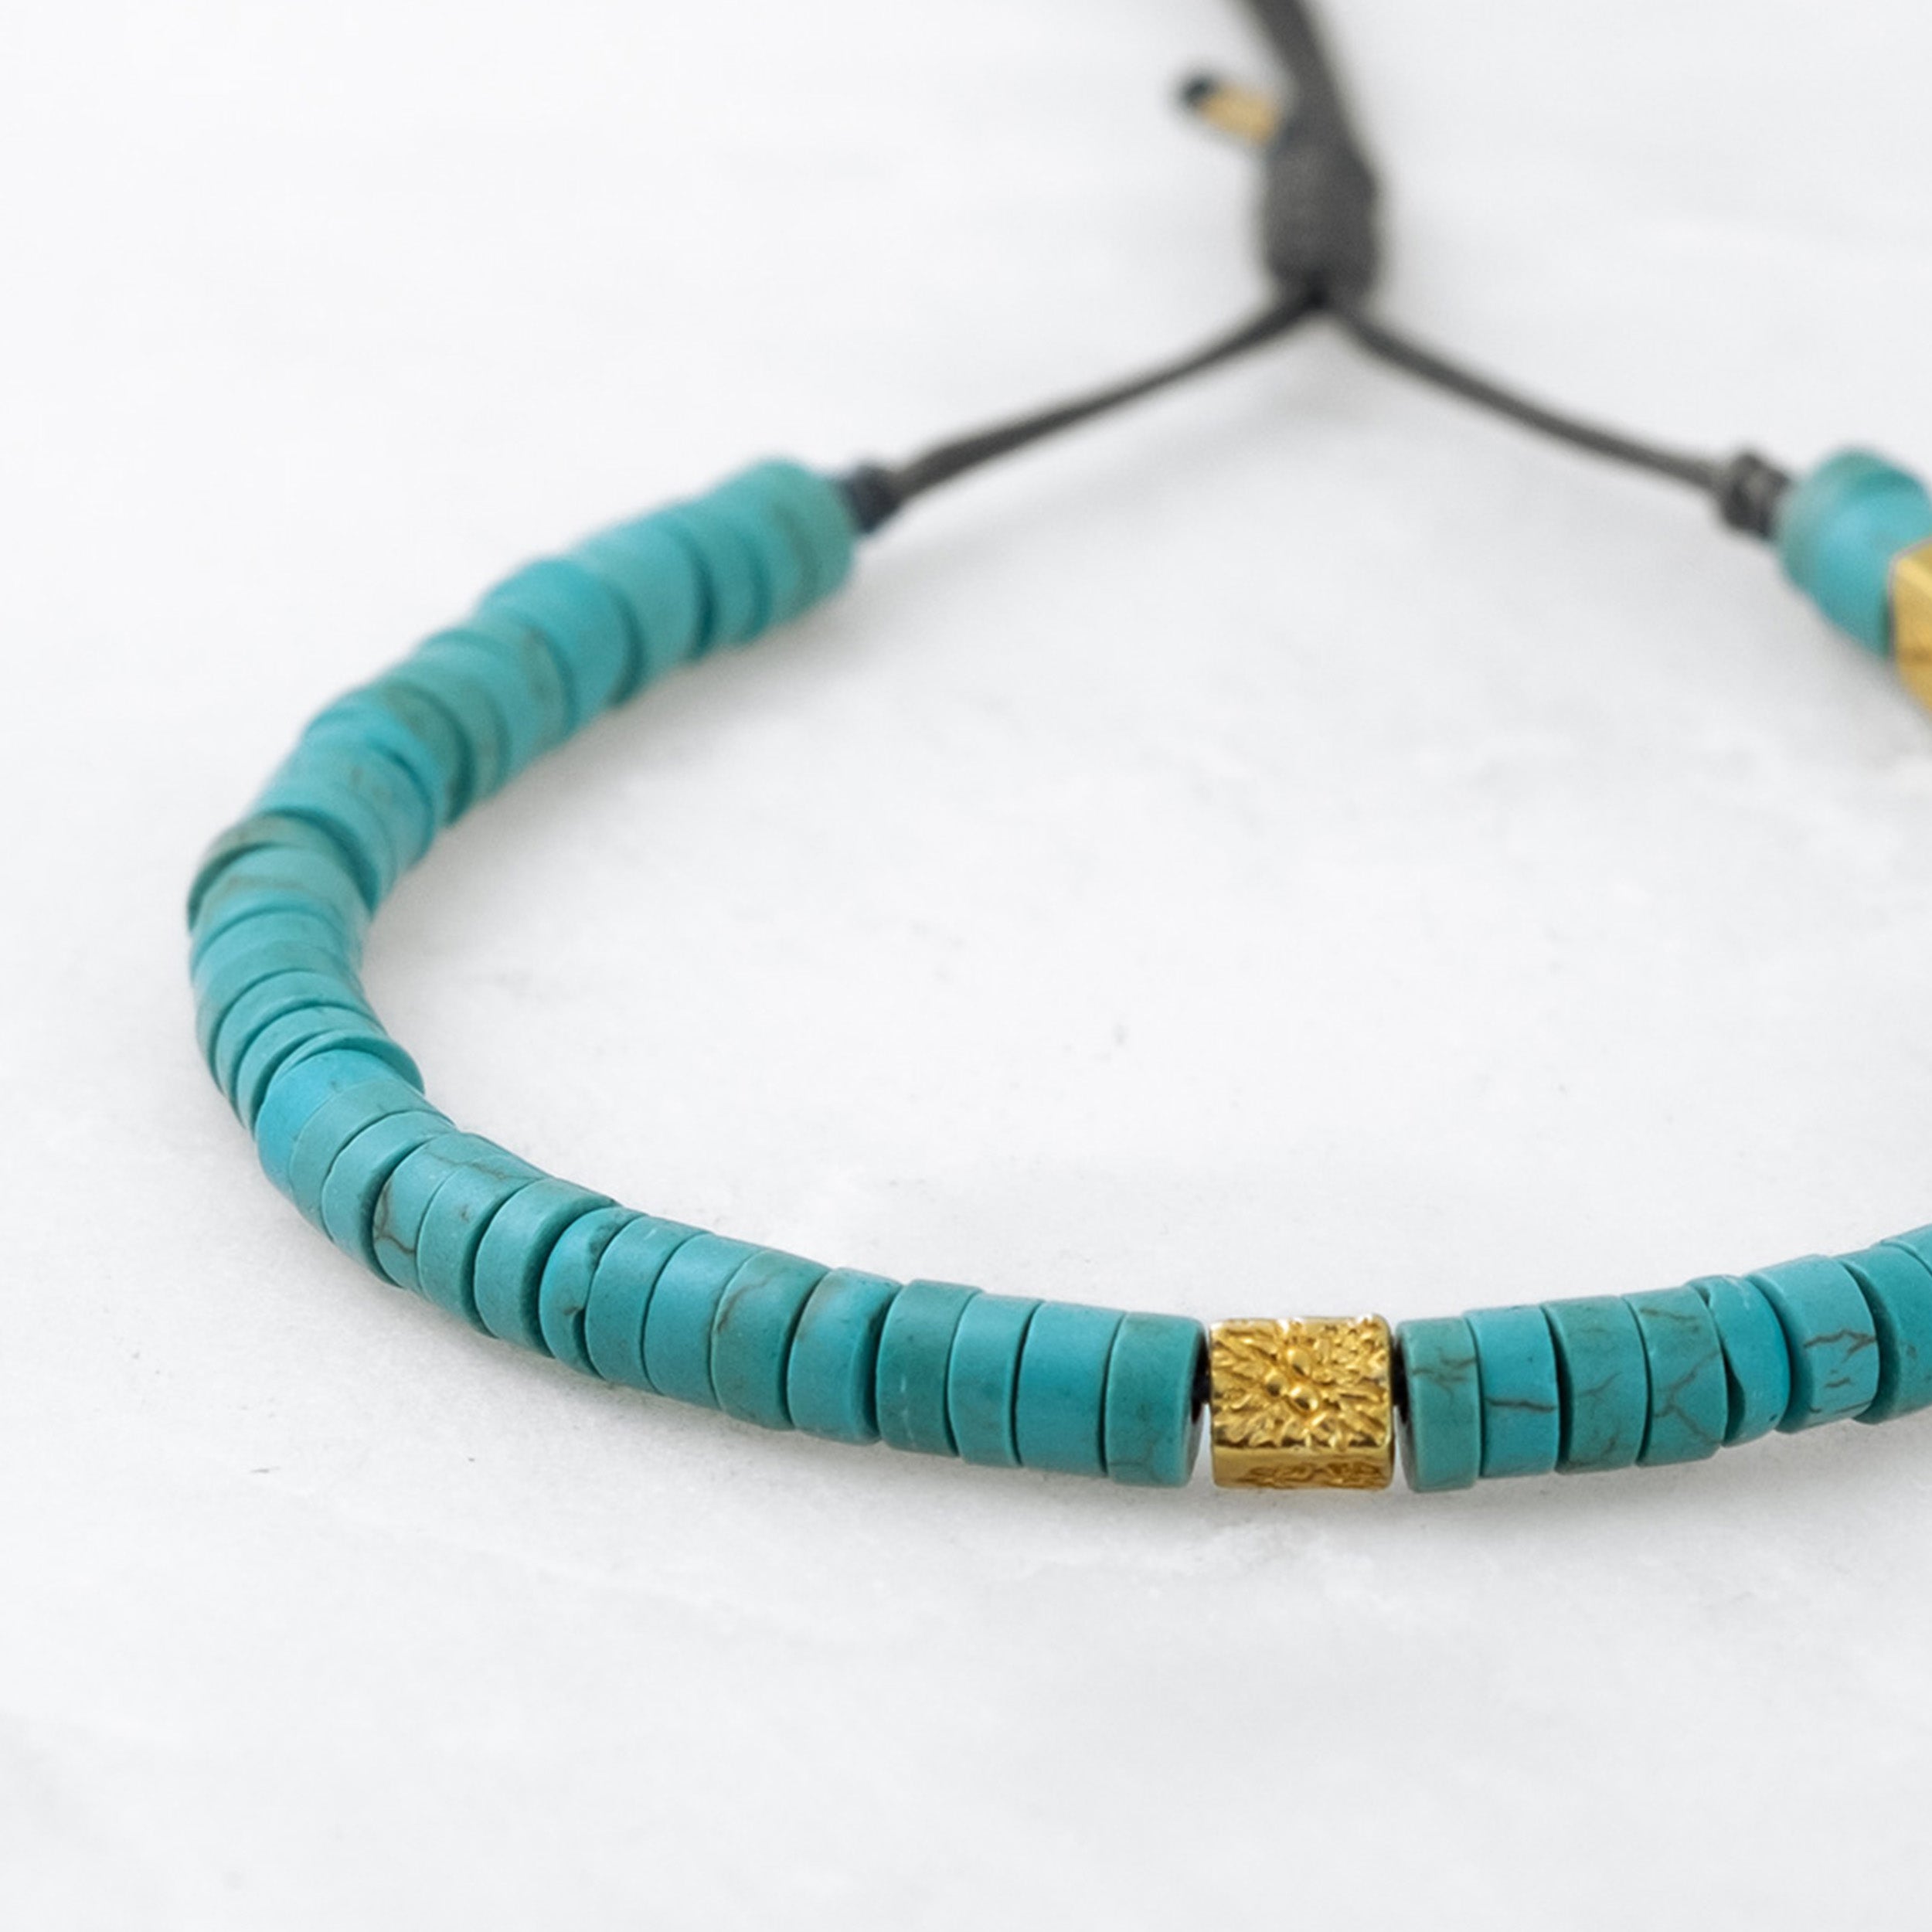 TIBET COLOR Bracelet - Turquoise, Golden Bodhi